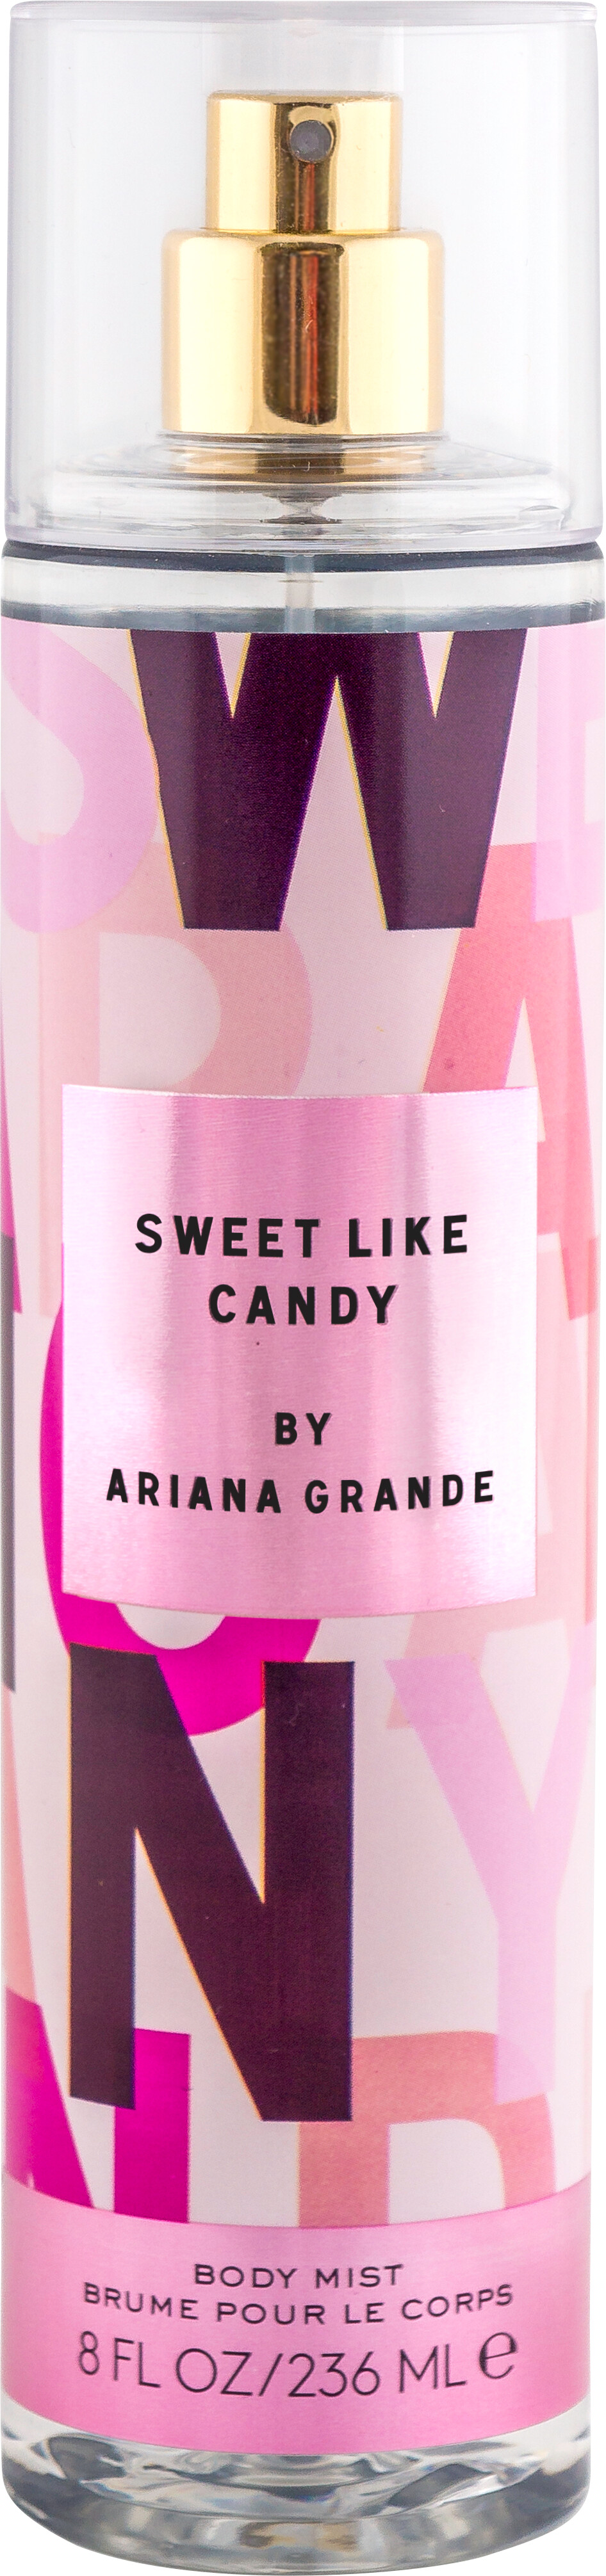 ariana grande sweet like candy mist